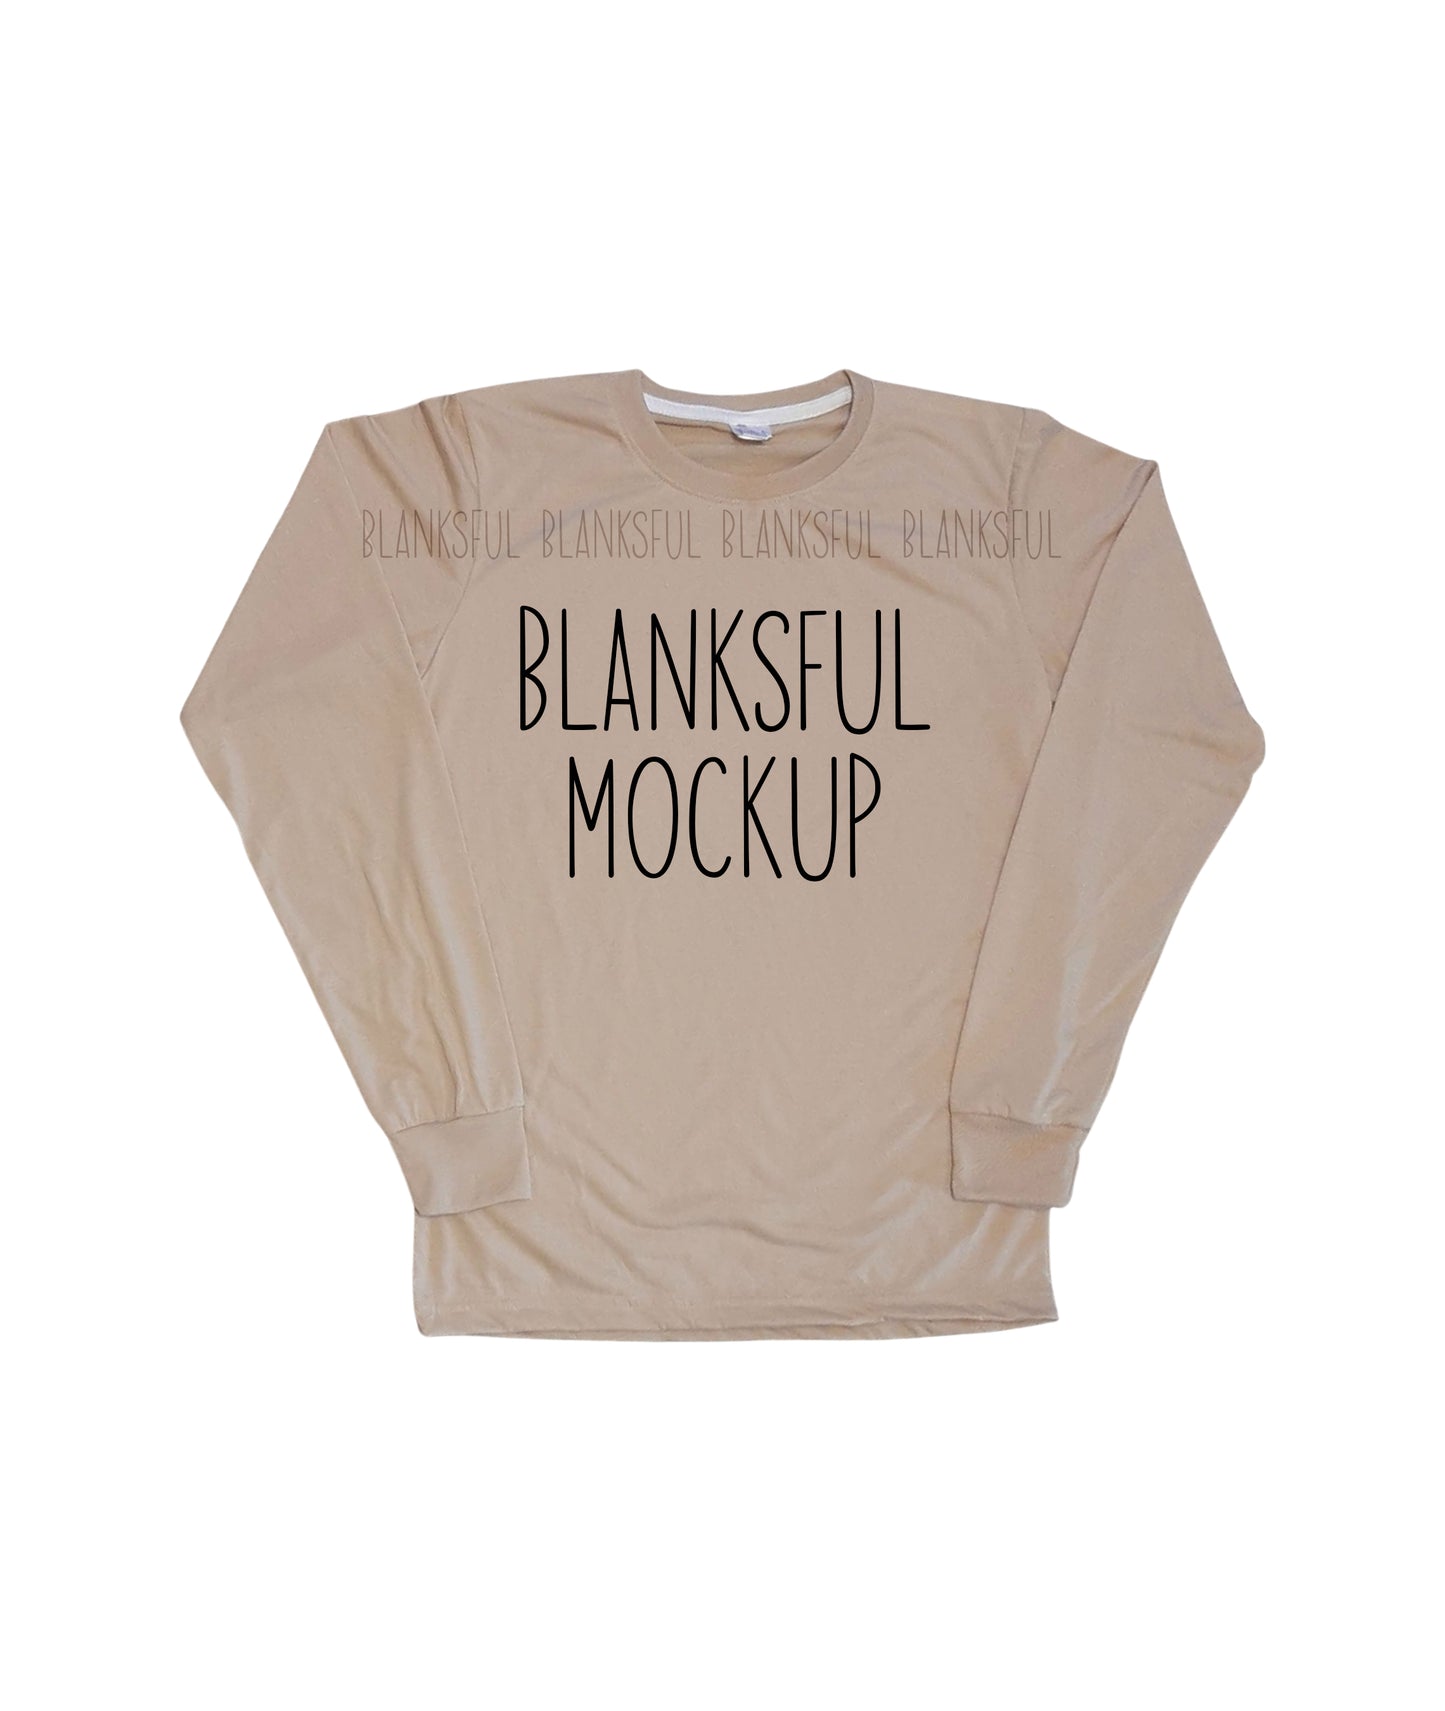 Blanksful Mockup Wheat Long Sleeve Shirt